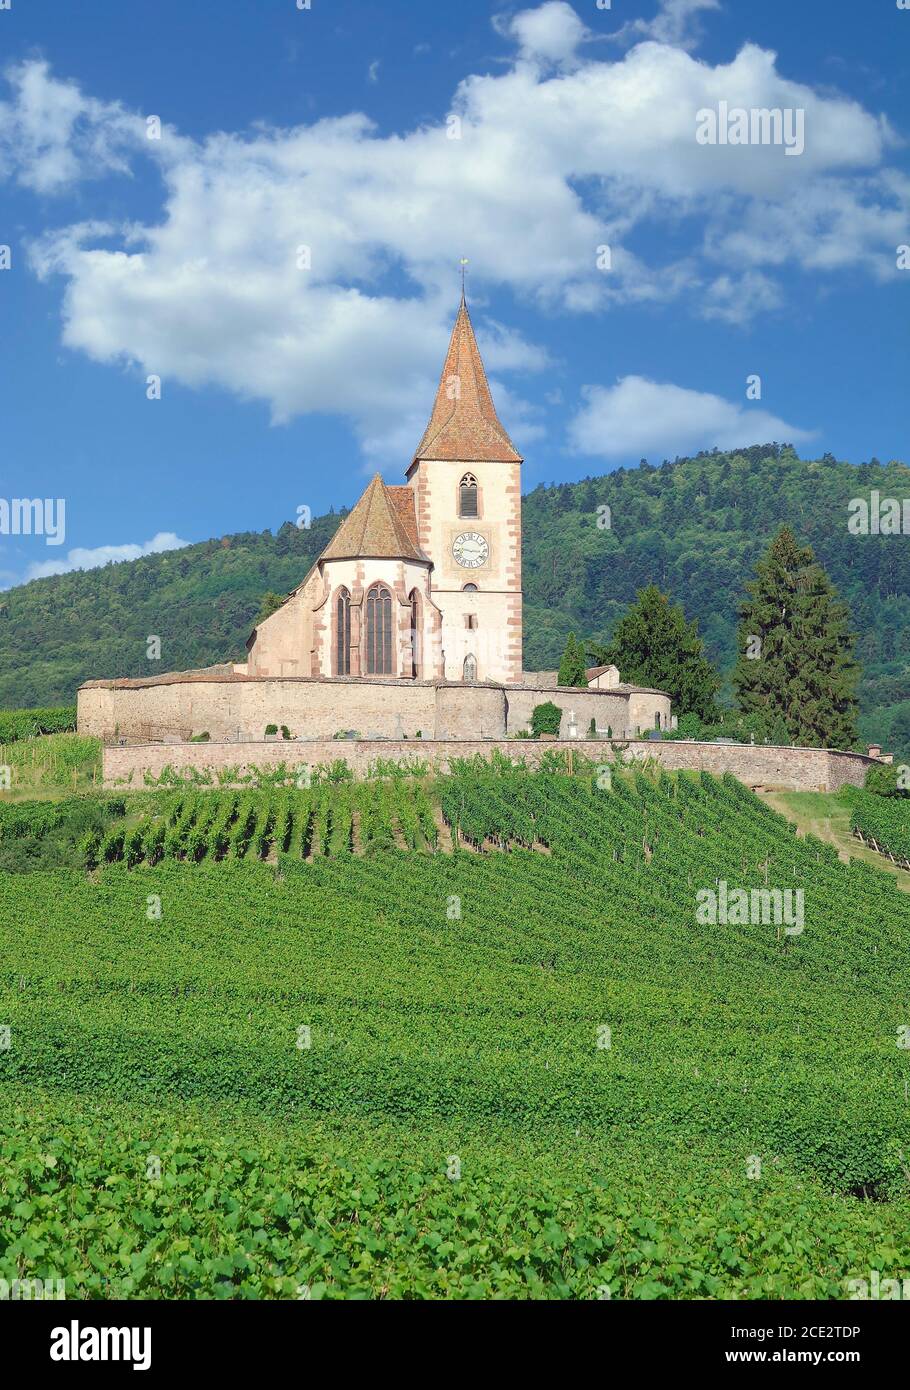 Church in Vineyard of Hunawihr,Grand est region (former Alsace),France Stock Photo